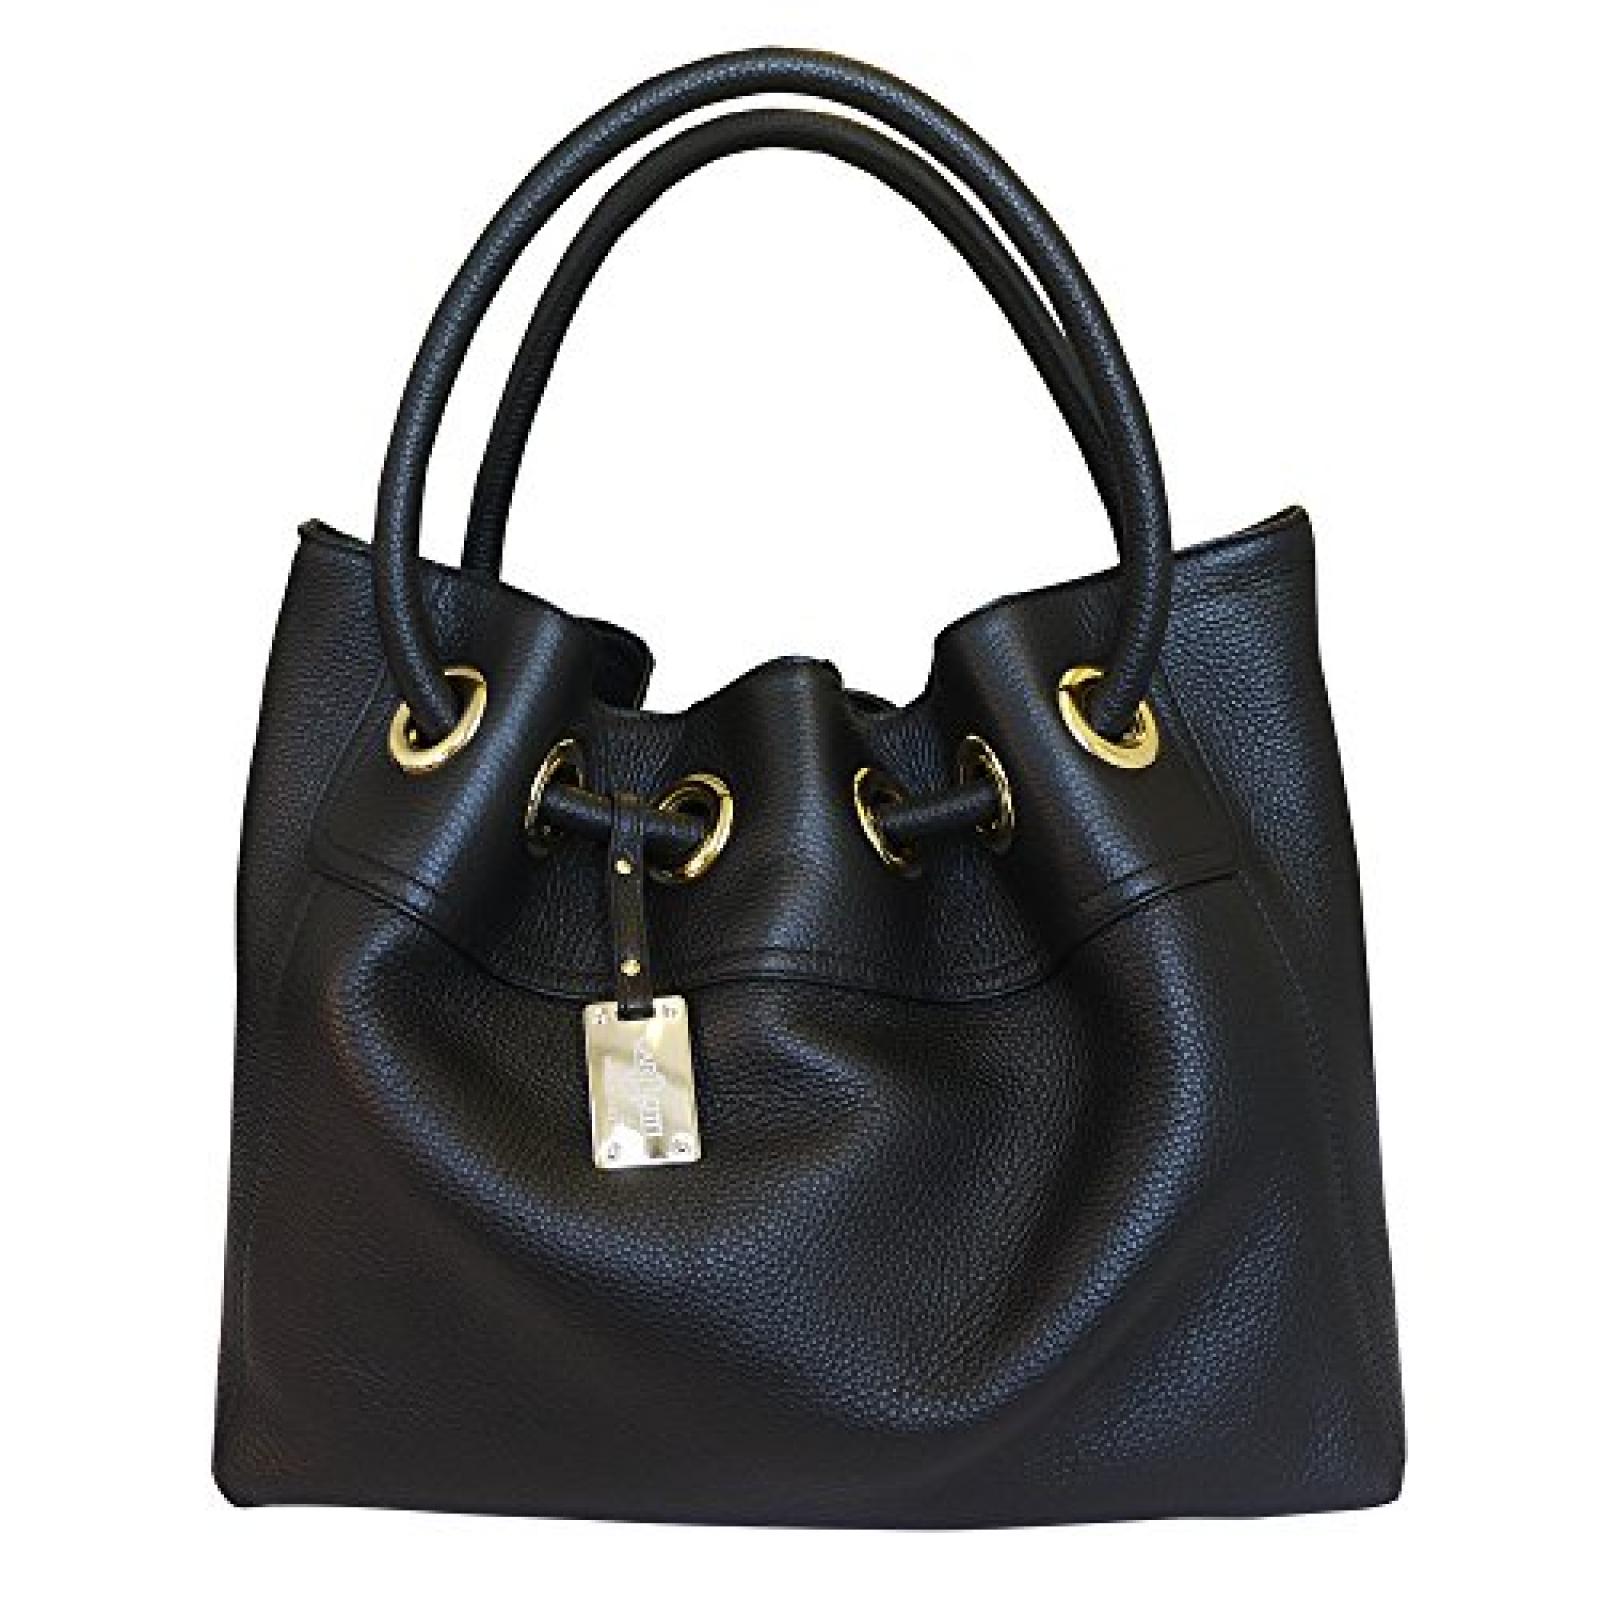 Designer italienischen Leder Hobo Bag Handtasche - schwarz 